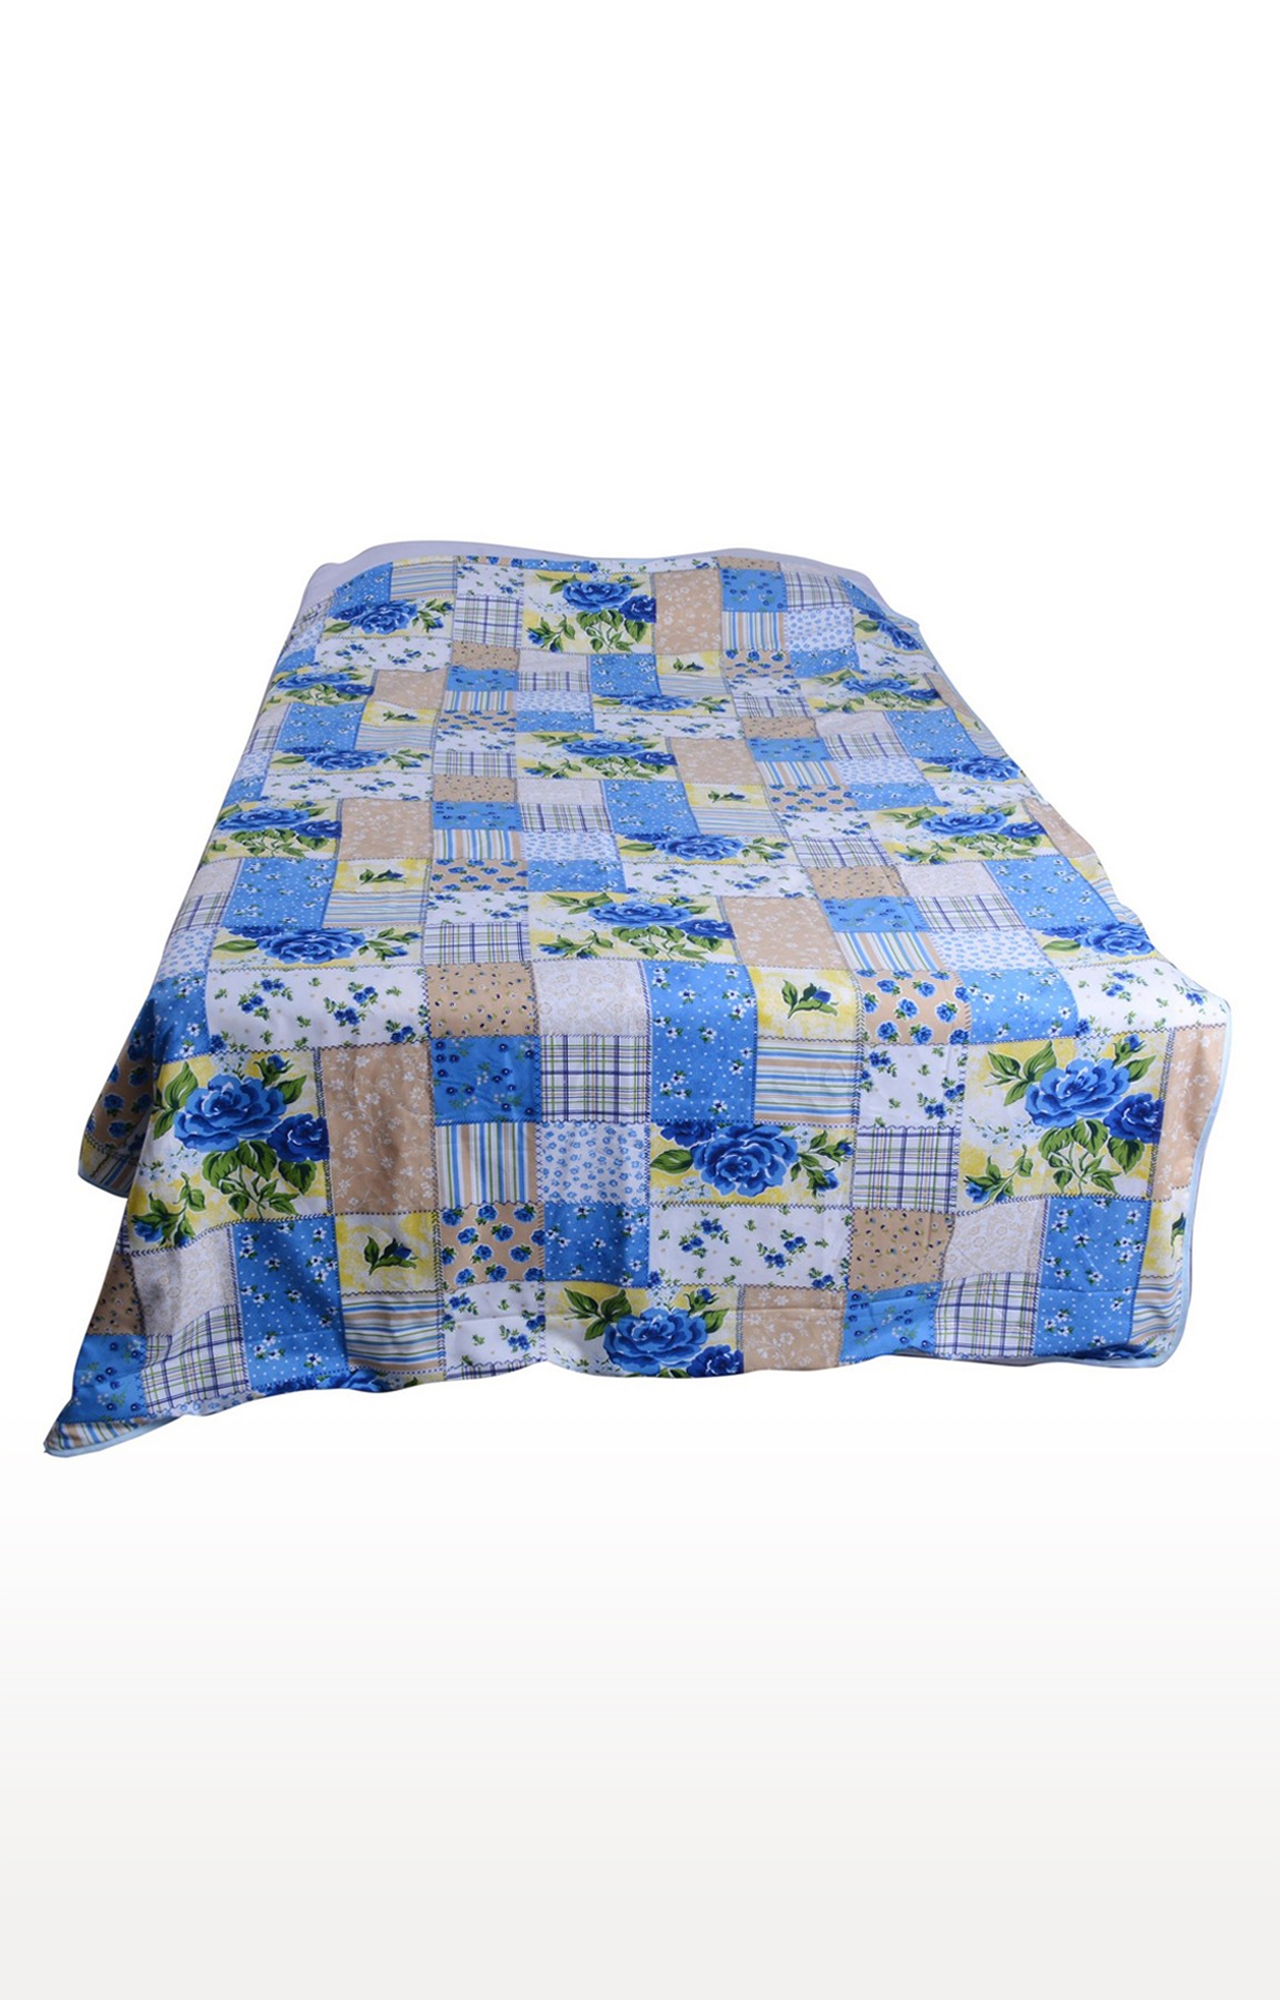 V Brown | Blue Checks & Flower Printed Cotton 3 Layer Single Bed Quilt Dohar